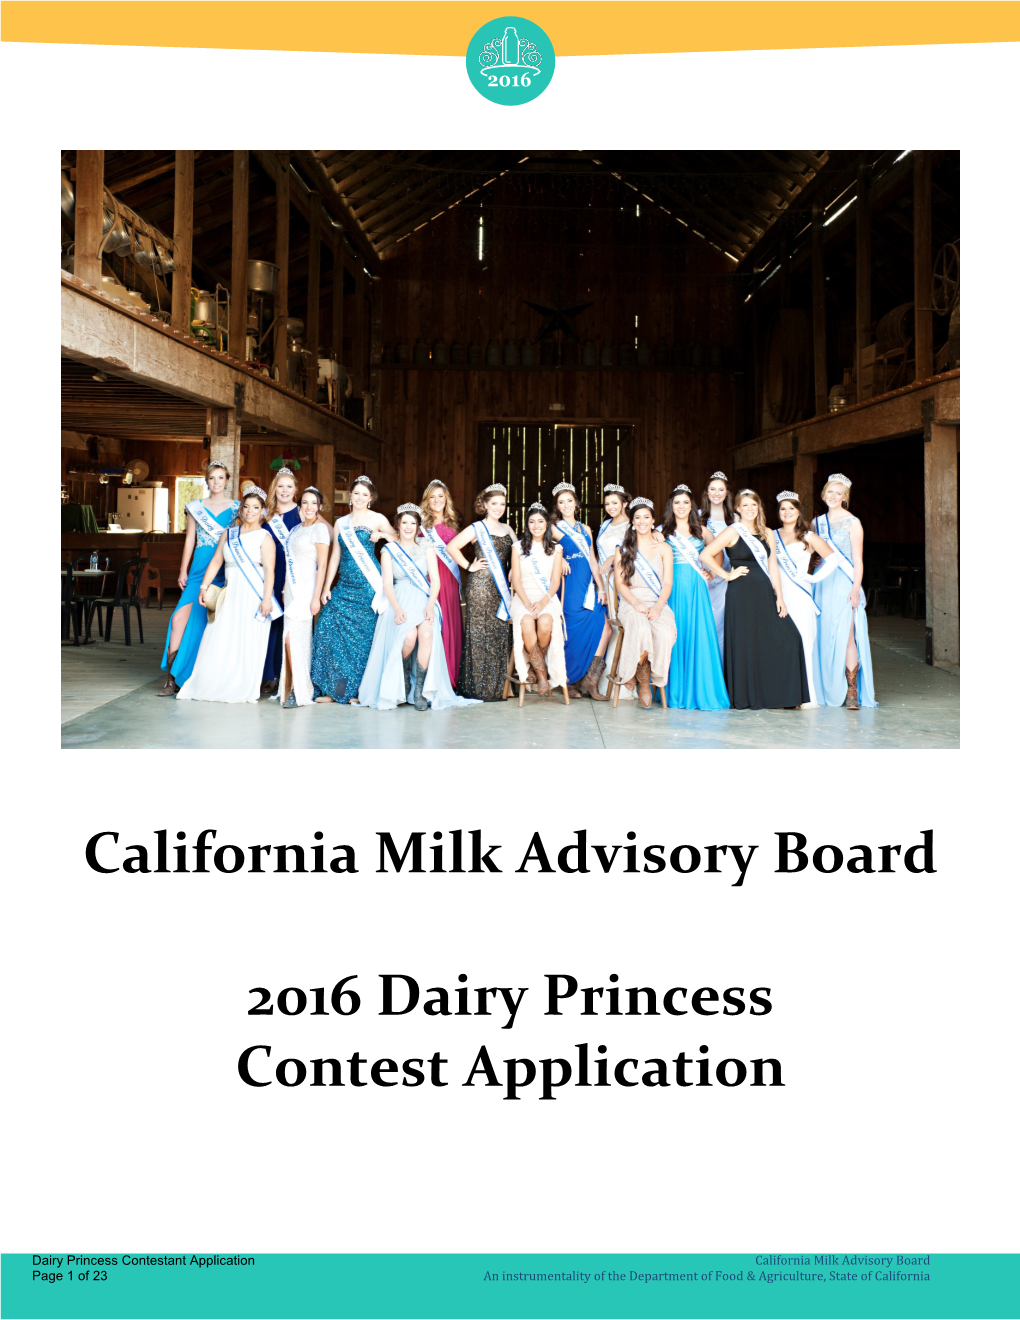 California Milk Advisory Board 2016 Dairy Princess Contest Application